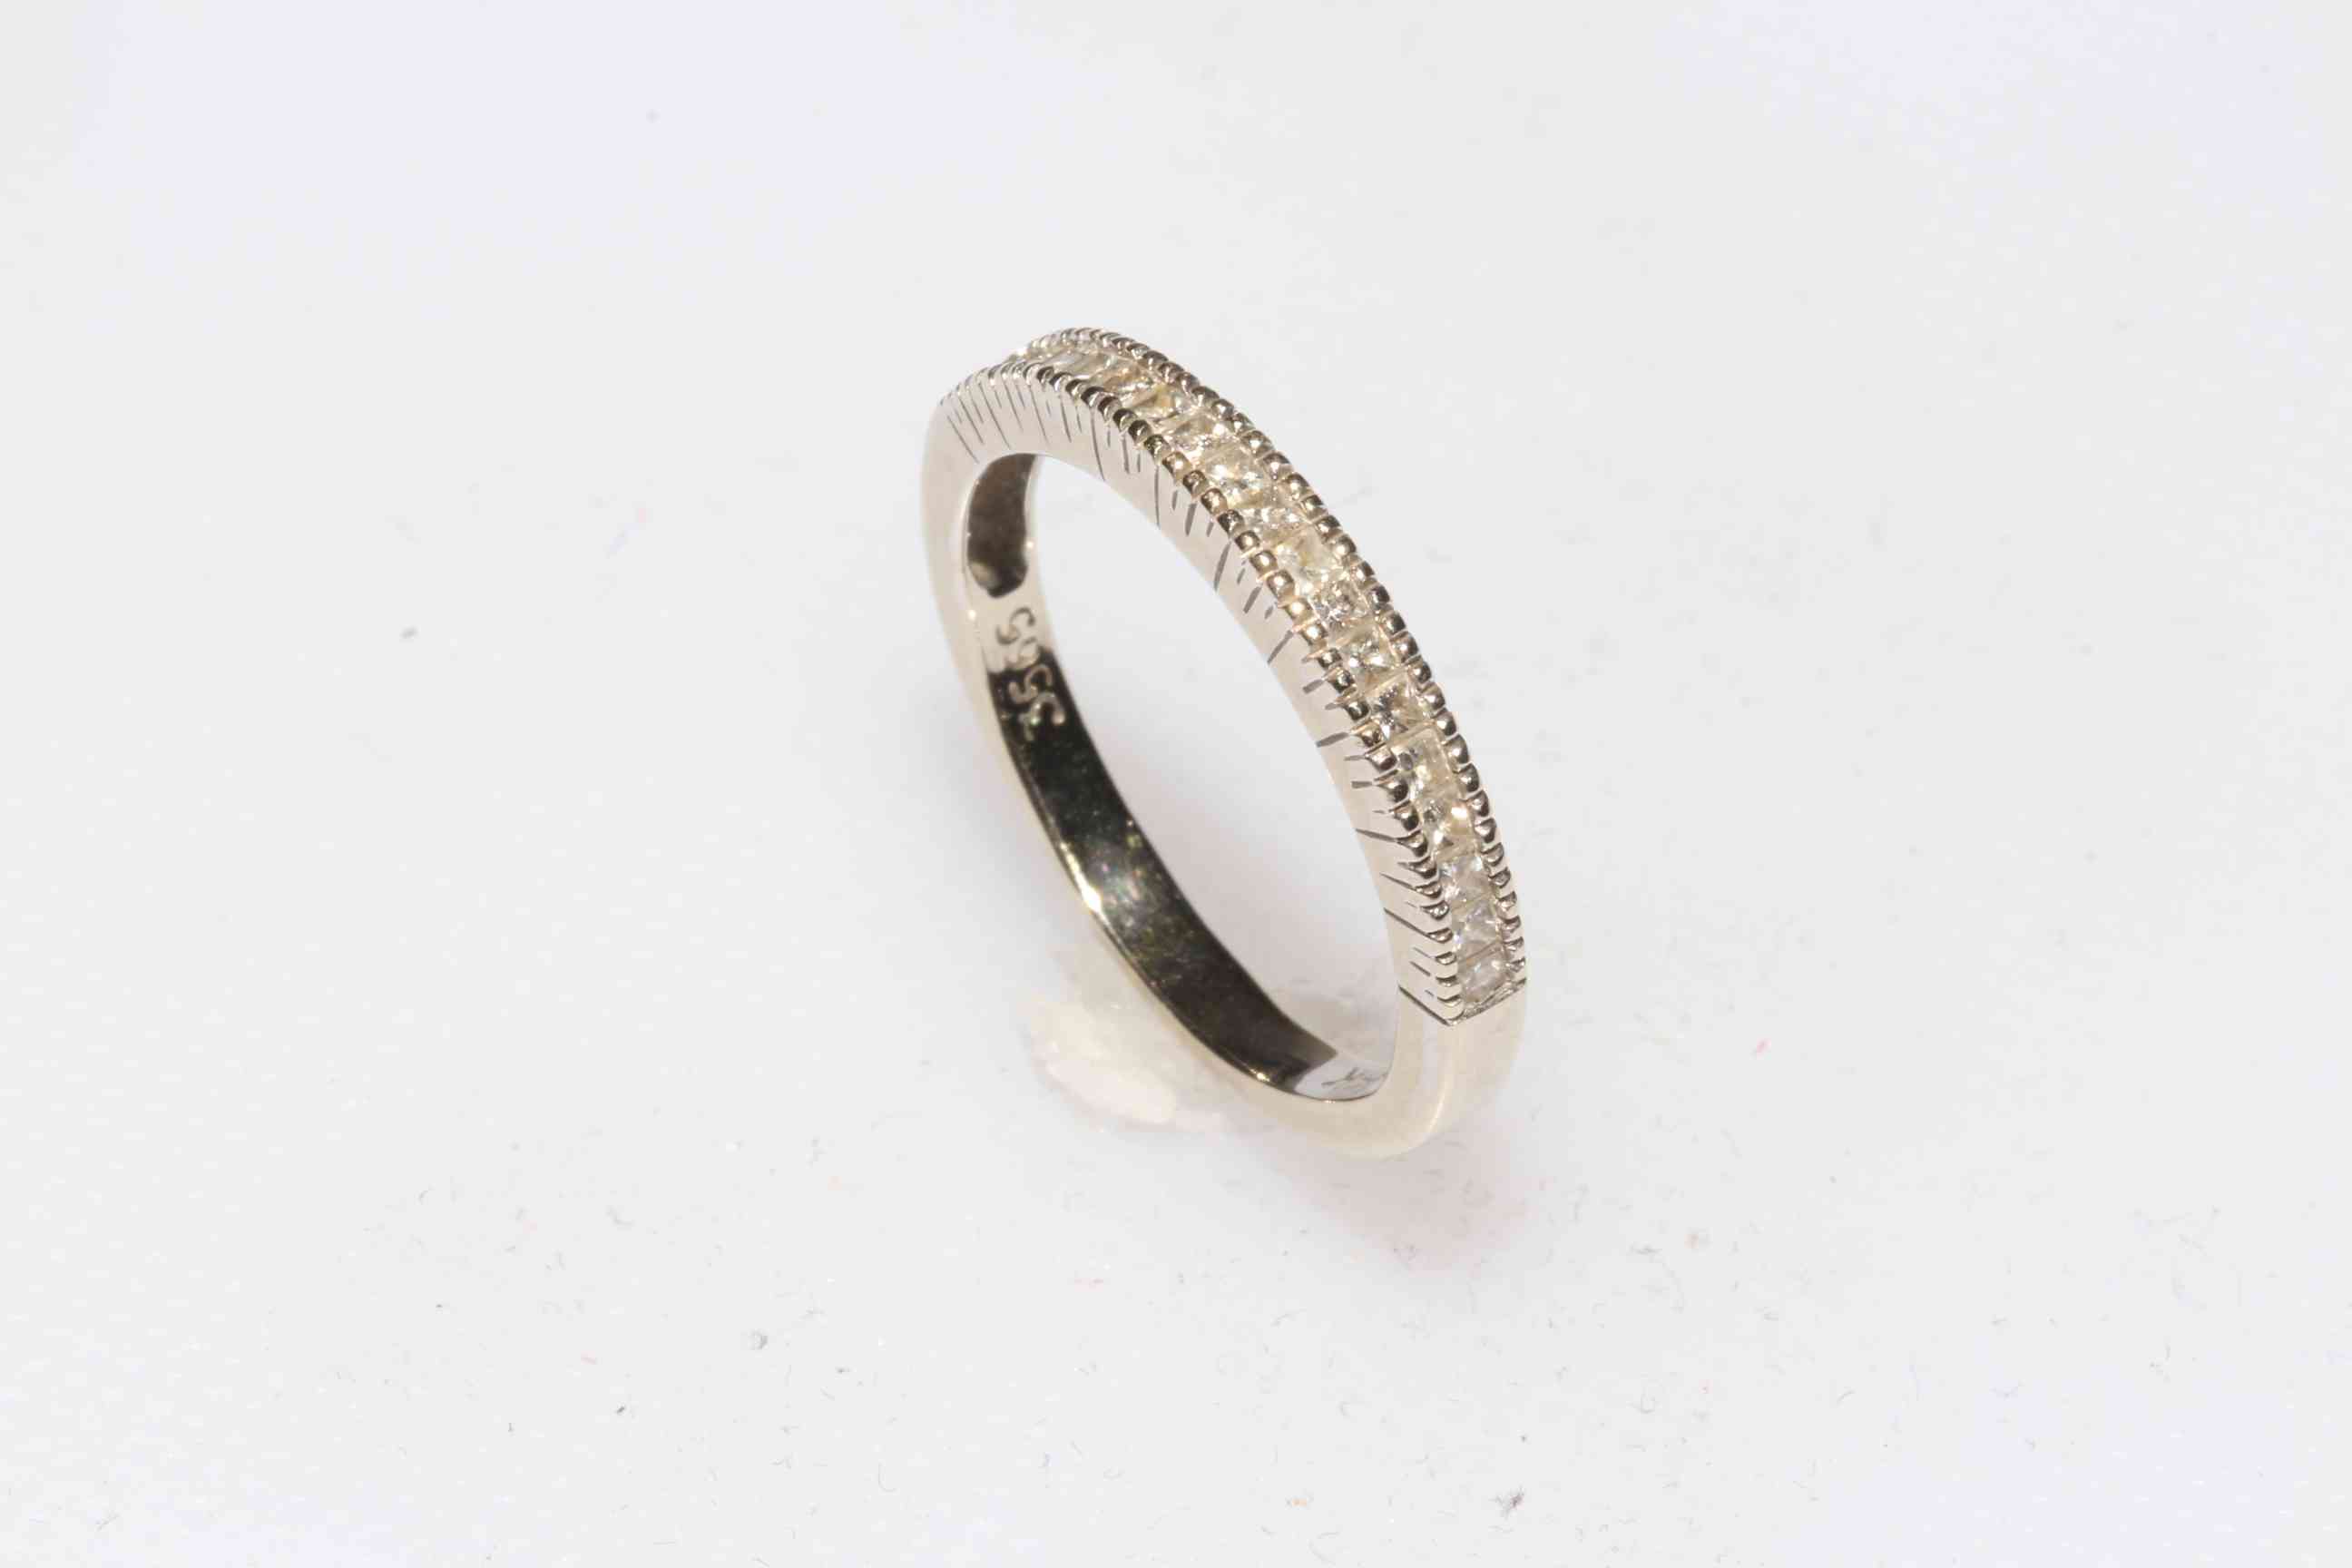 9 carat gold half eternity ring, size K/L.